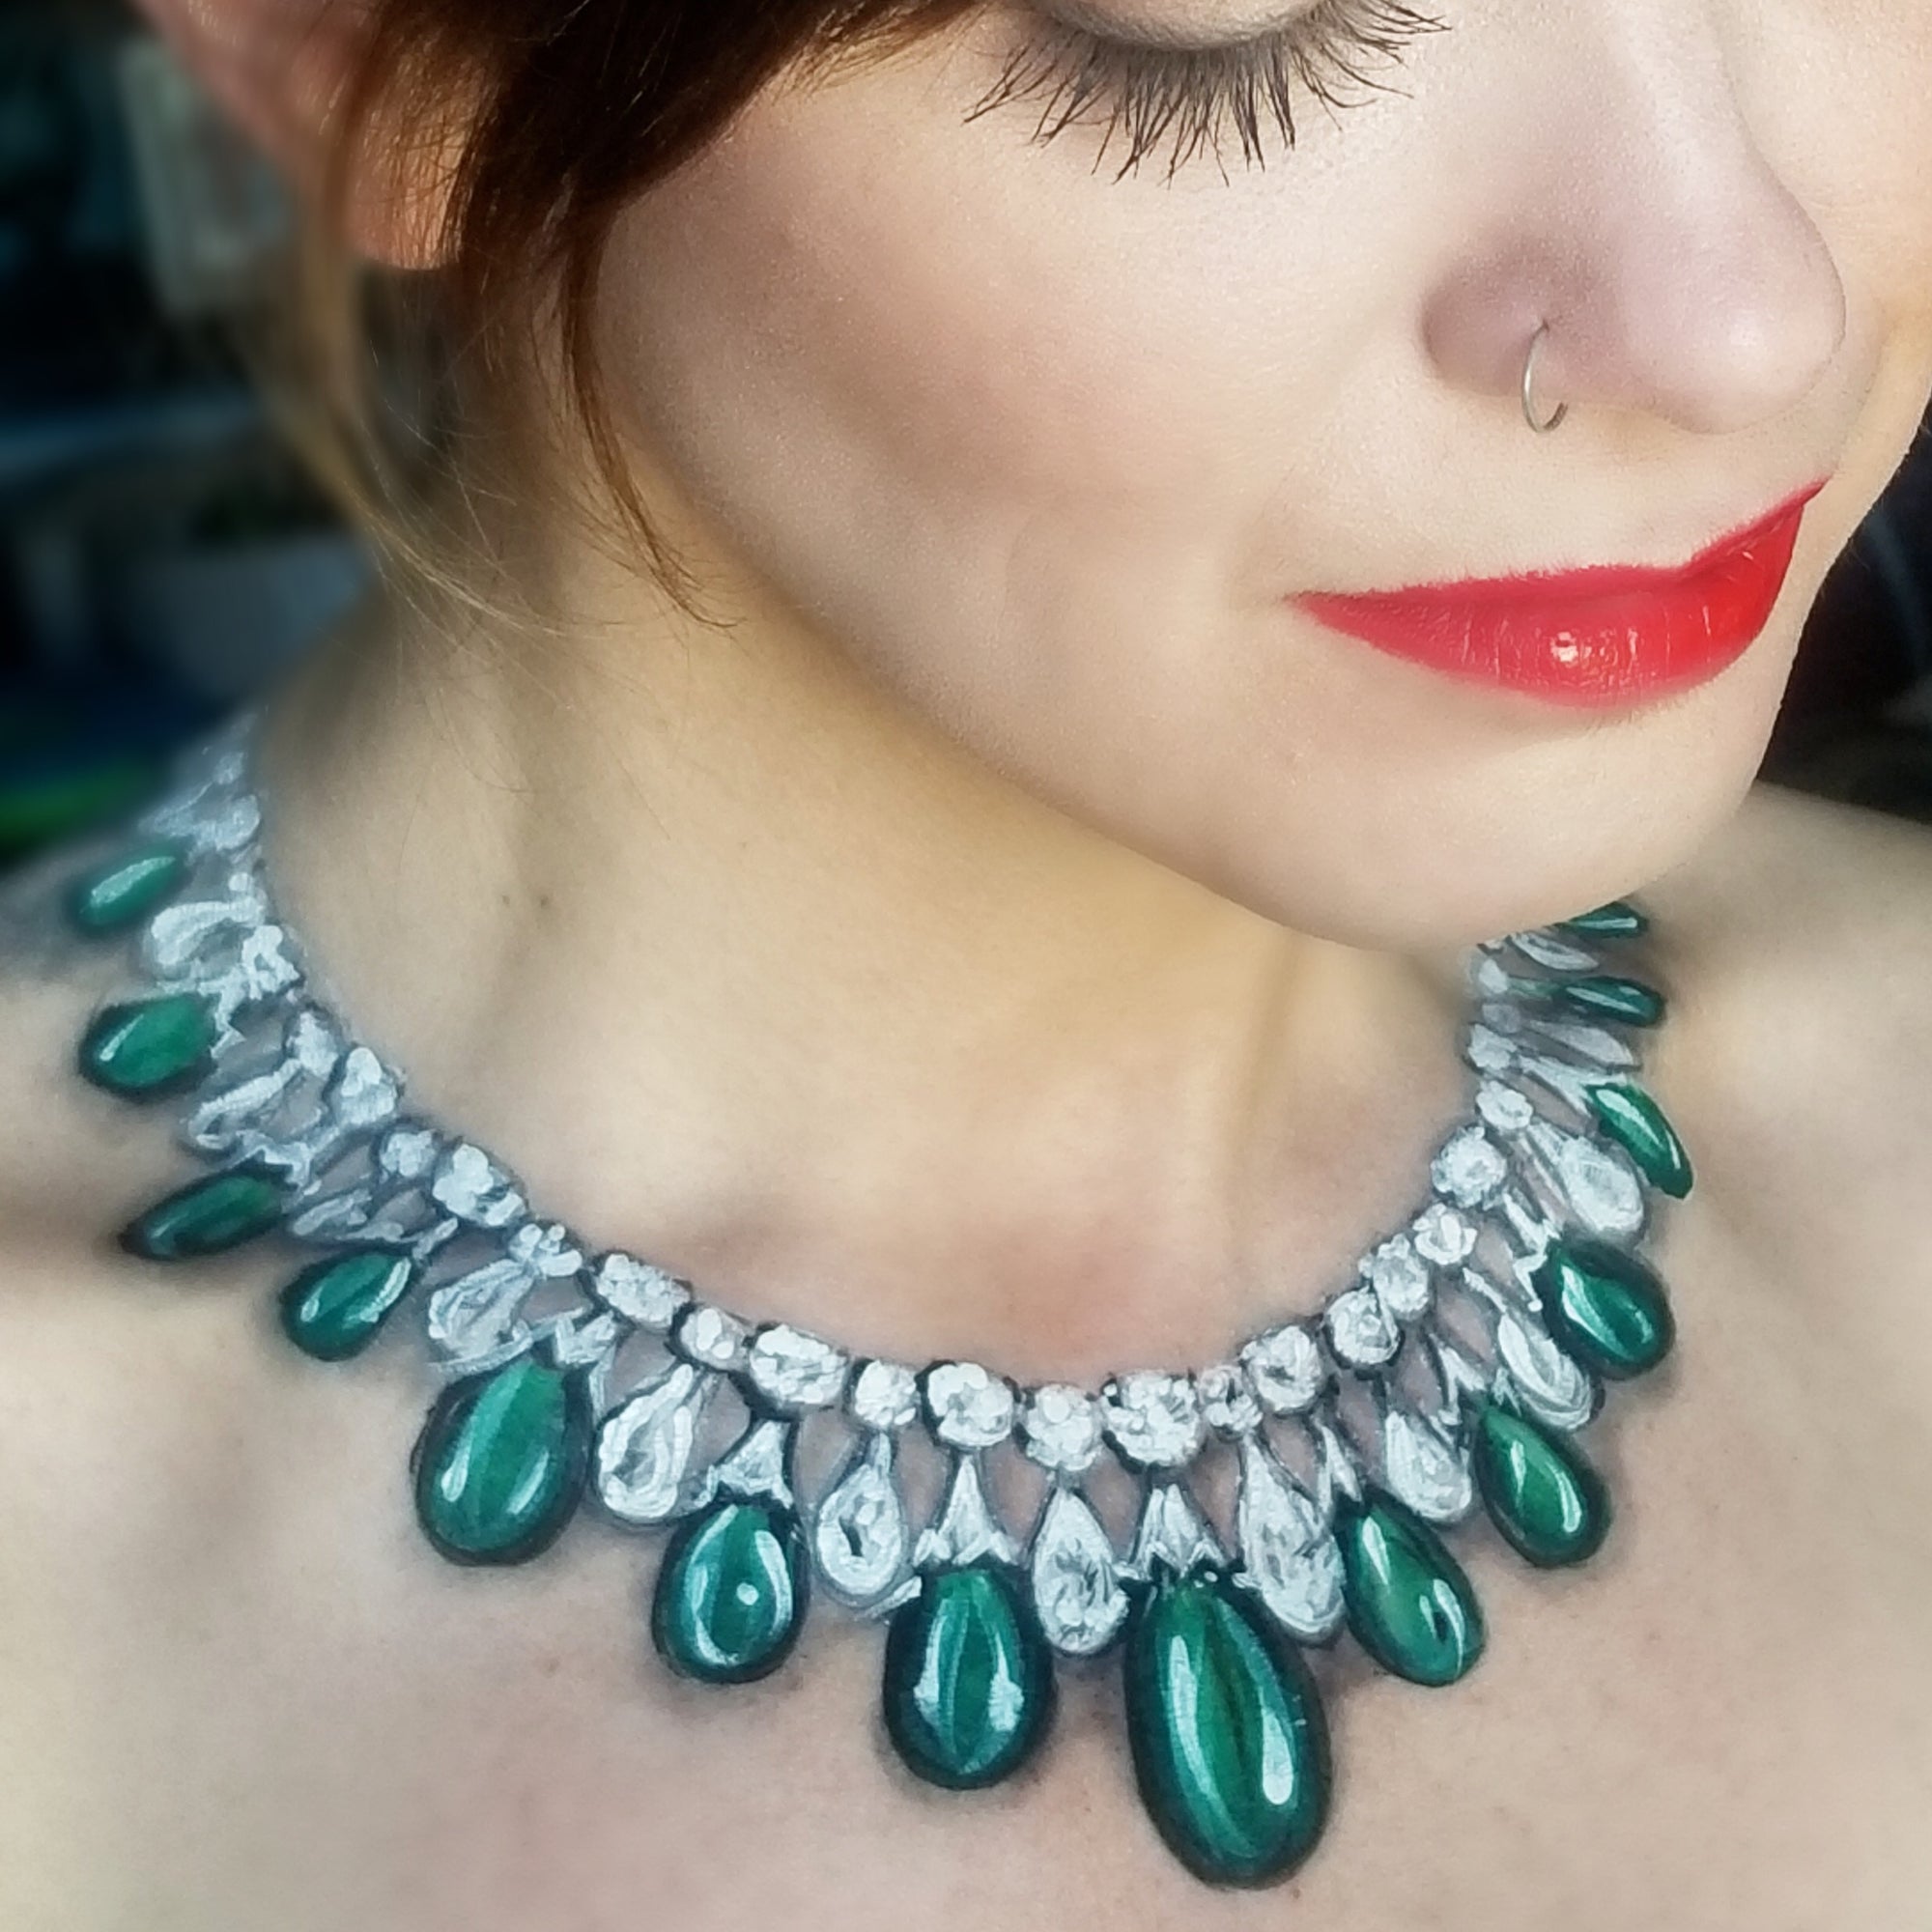 Diamond and Emerald Necklace Body Art by Kellie Burrus